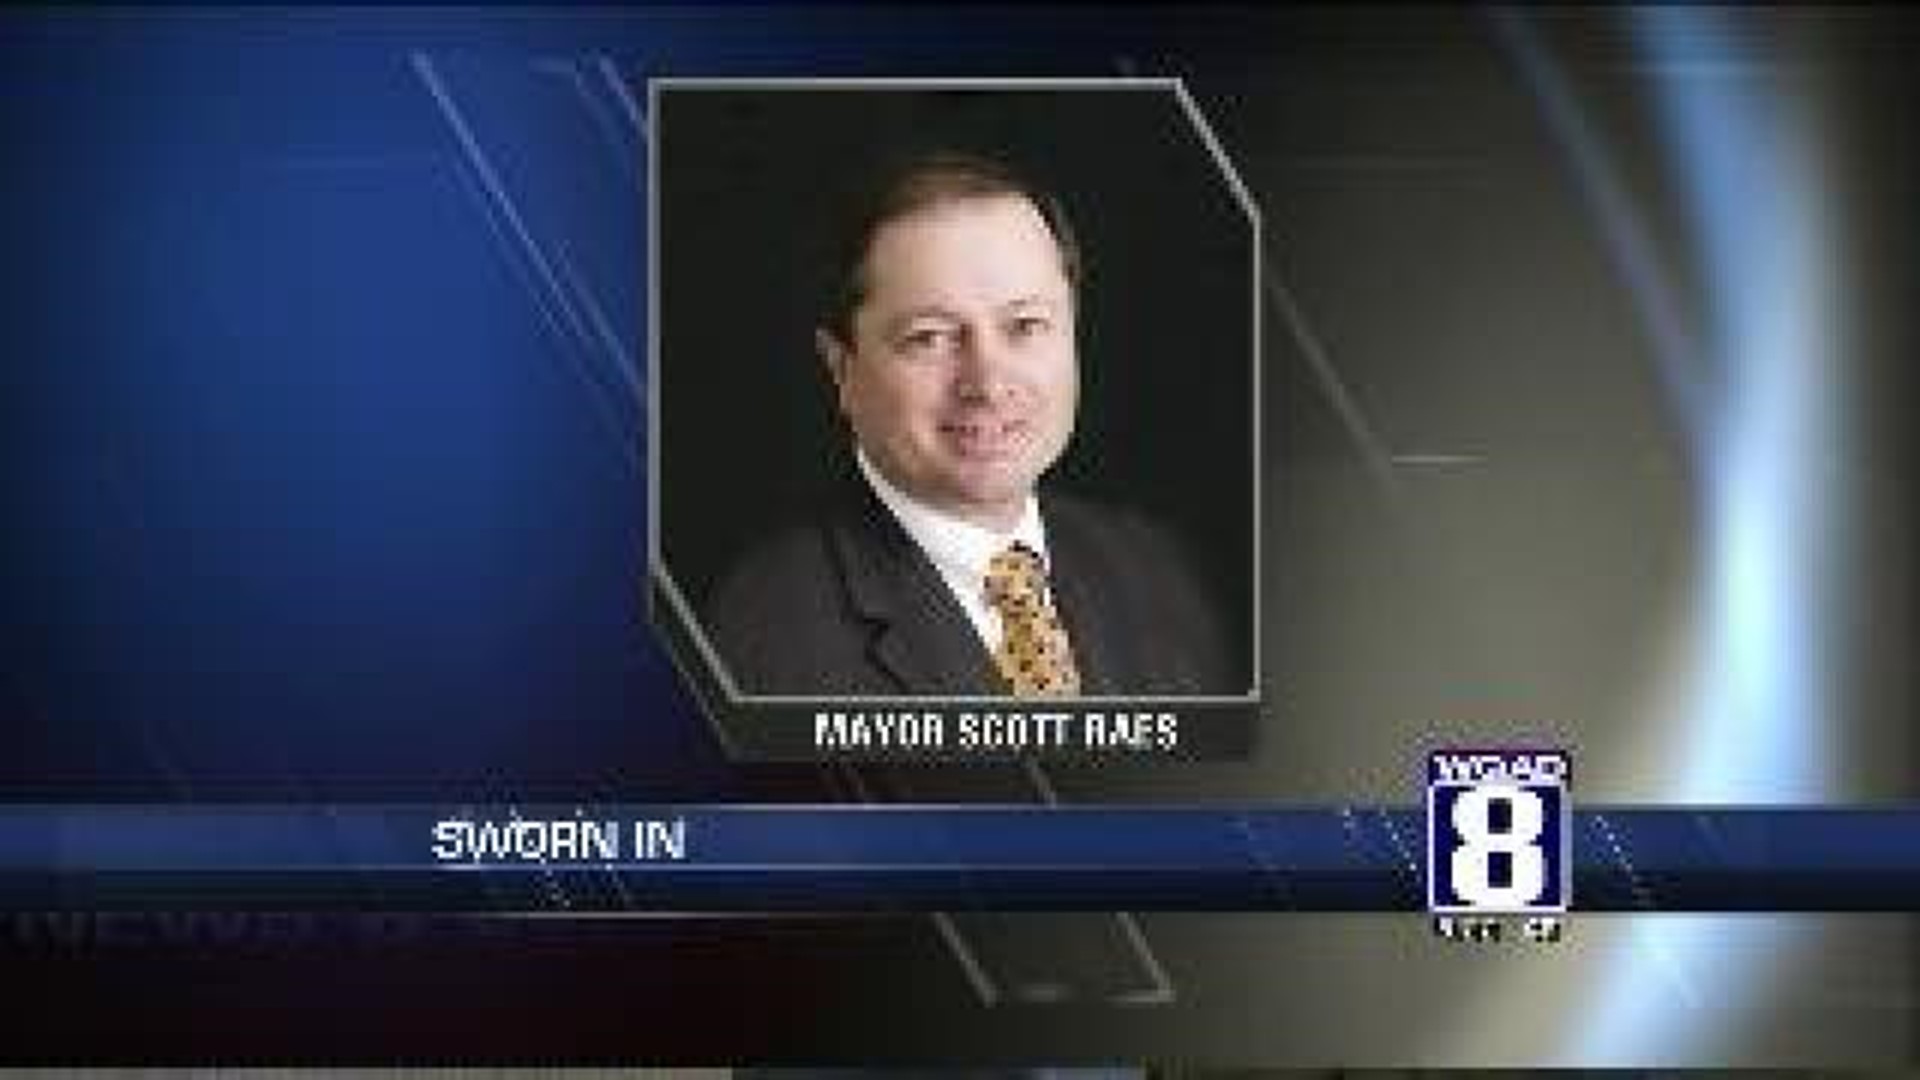 Scott Raes becomes Moline Mayor